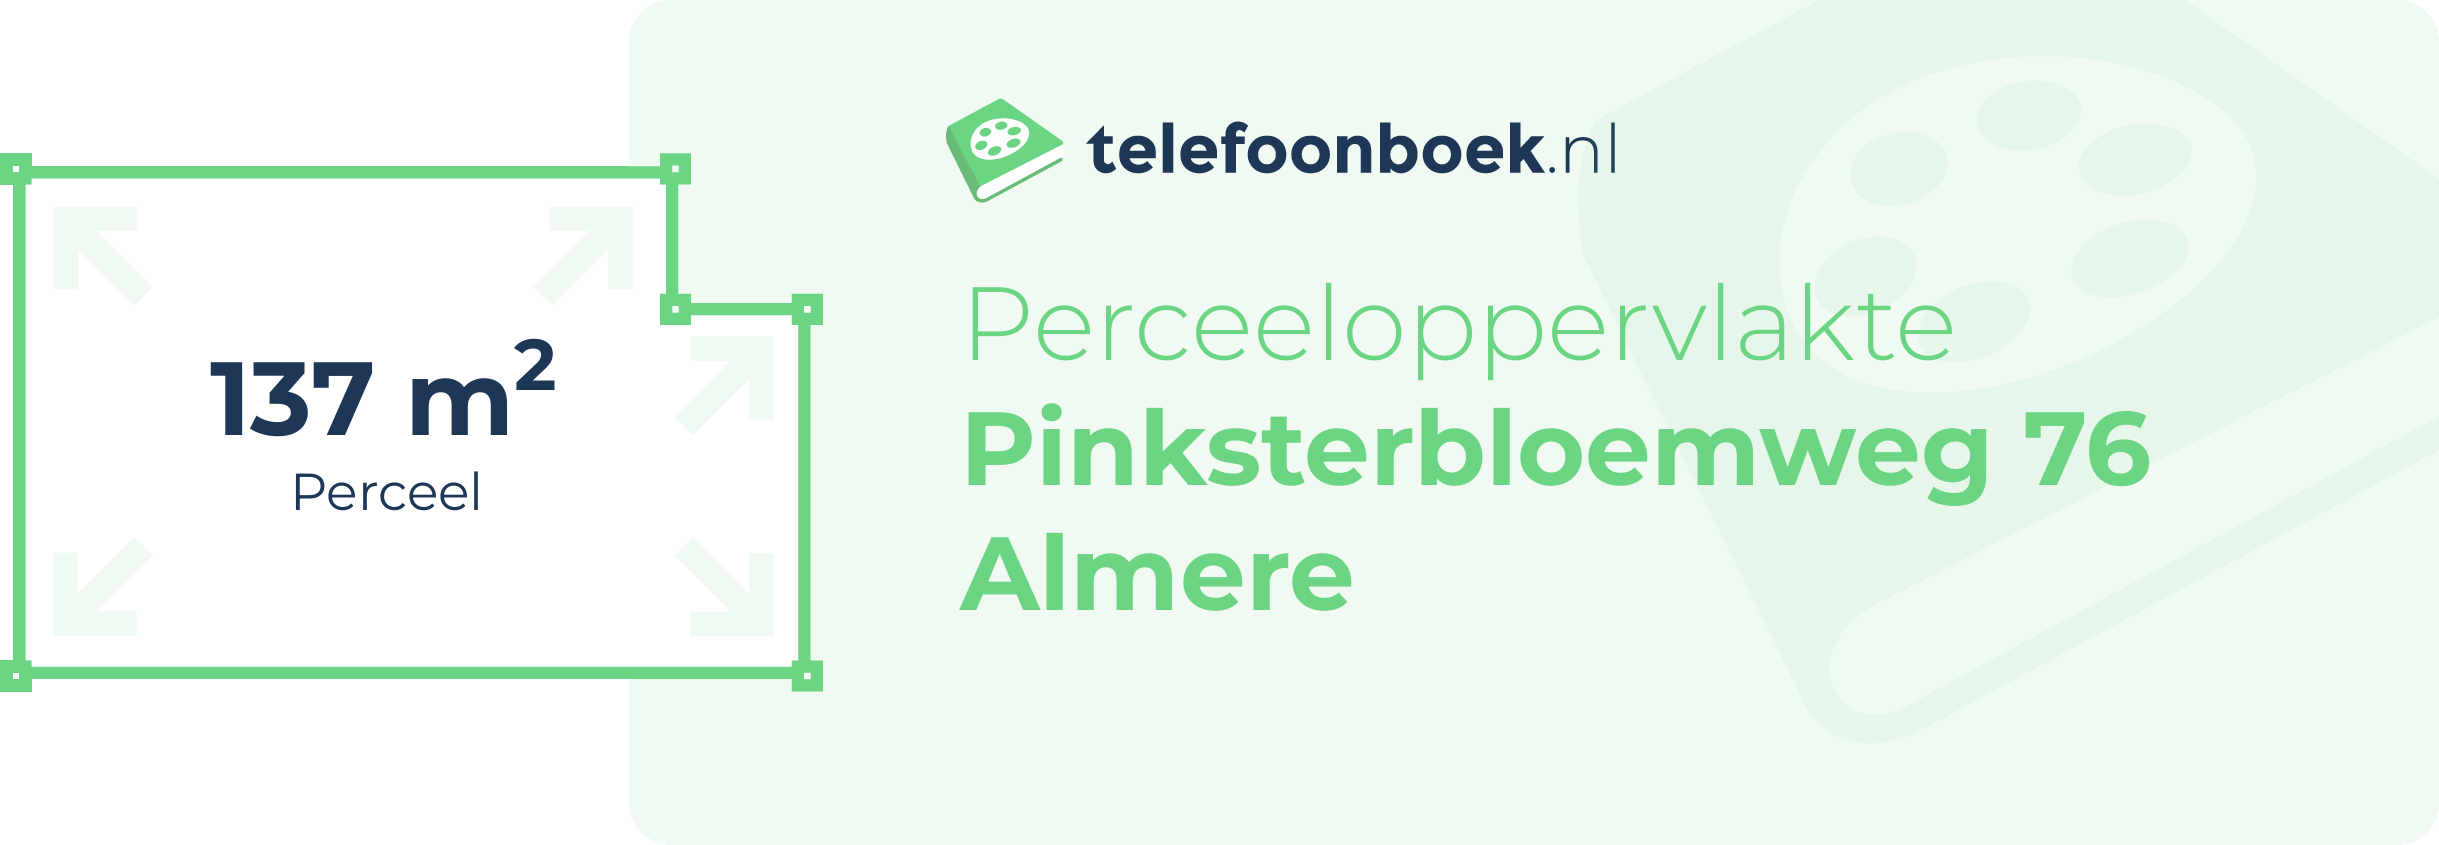 Perceeloppervlakte Pinksterbloemweg 76 Almere